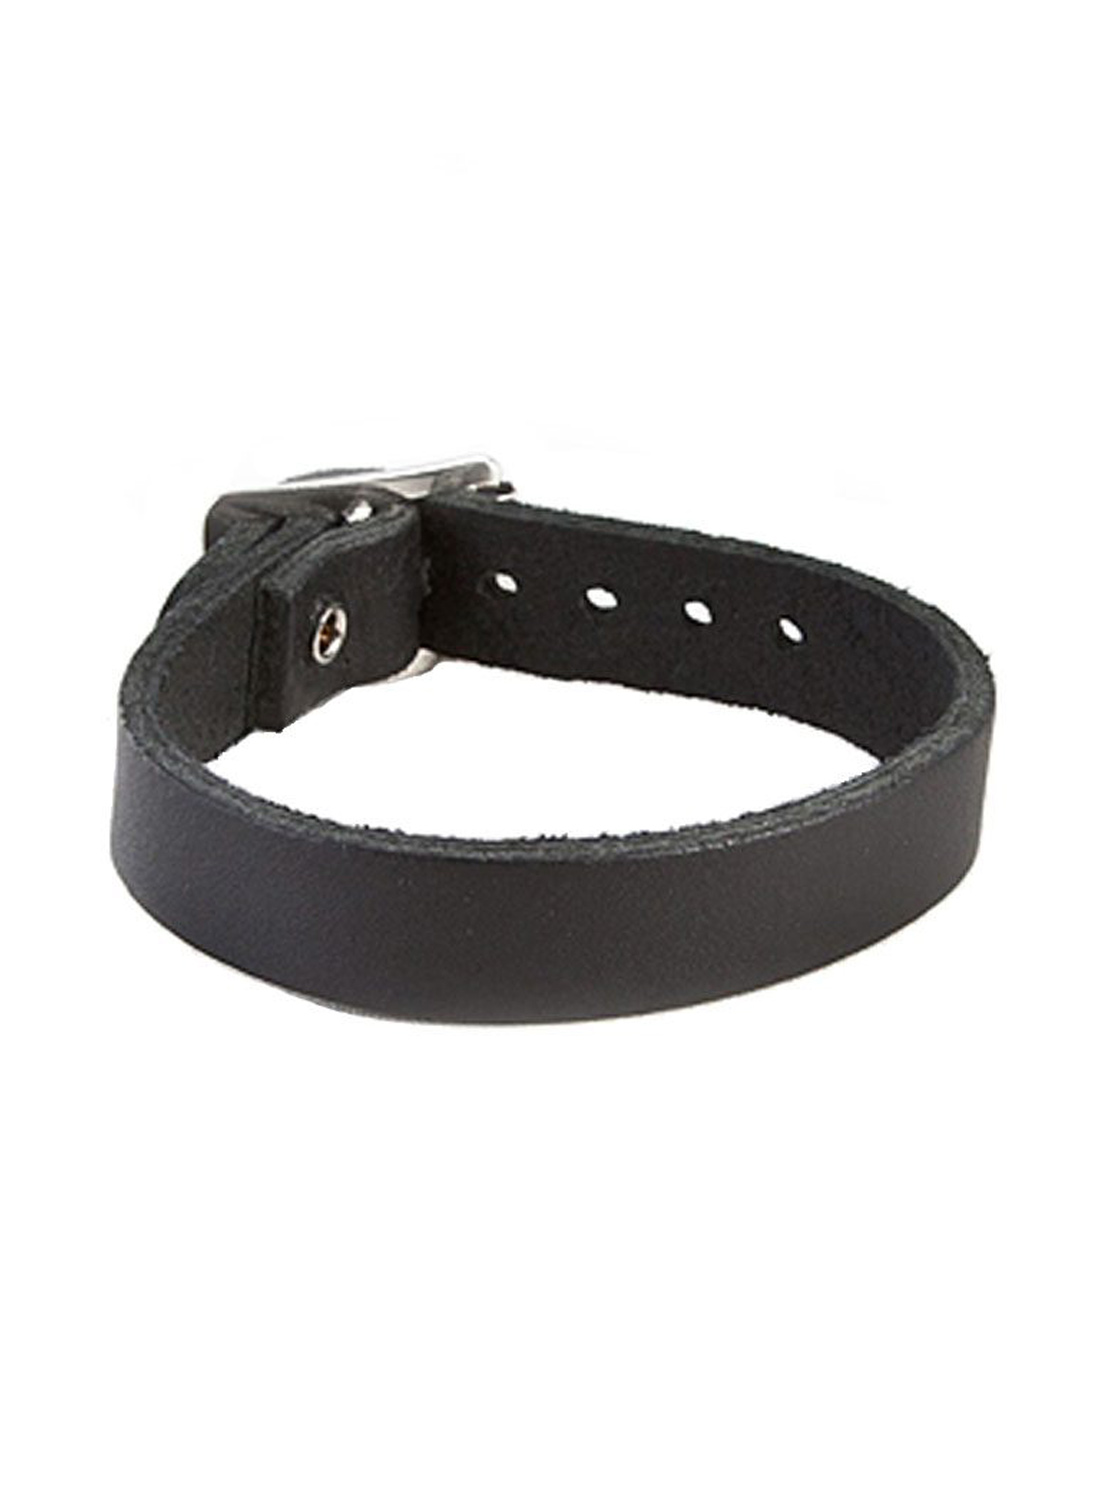 1-Row Leather Wristband